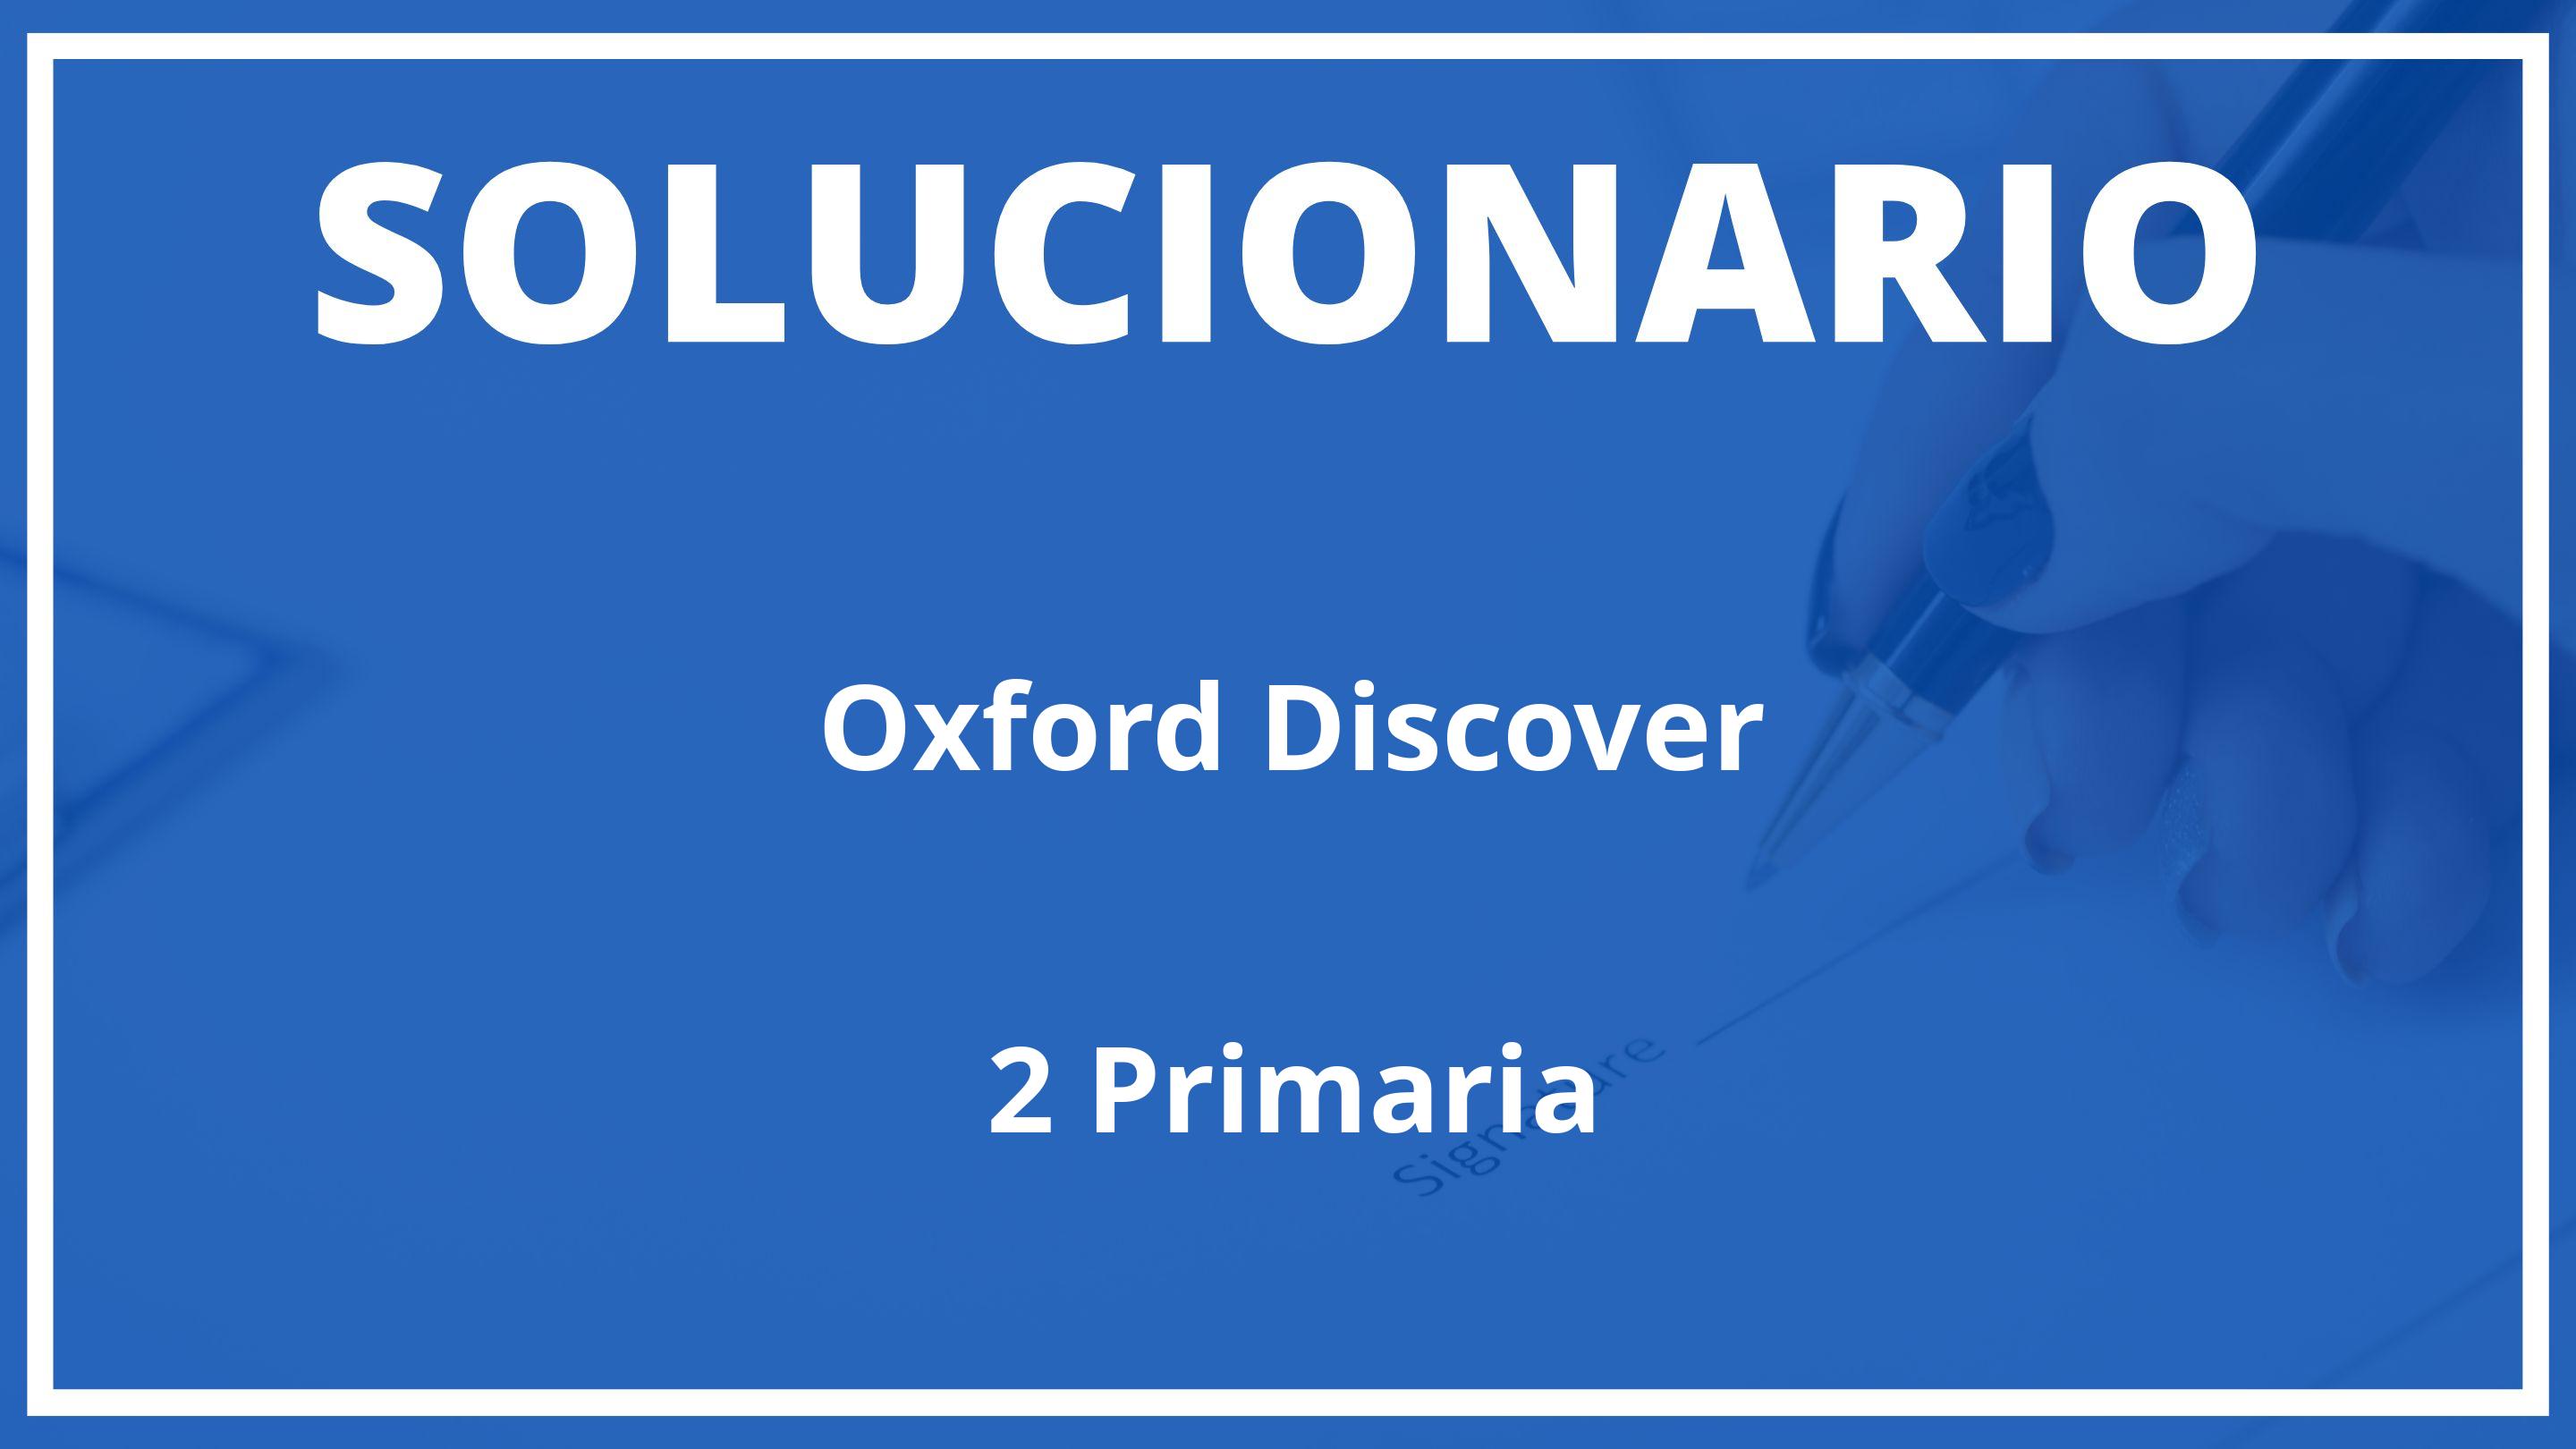 Solucionario Oxford Discover  Oxford 2 Primaria